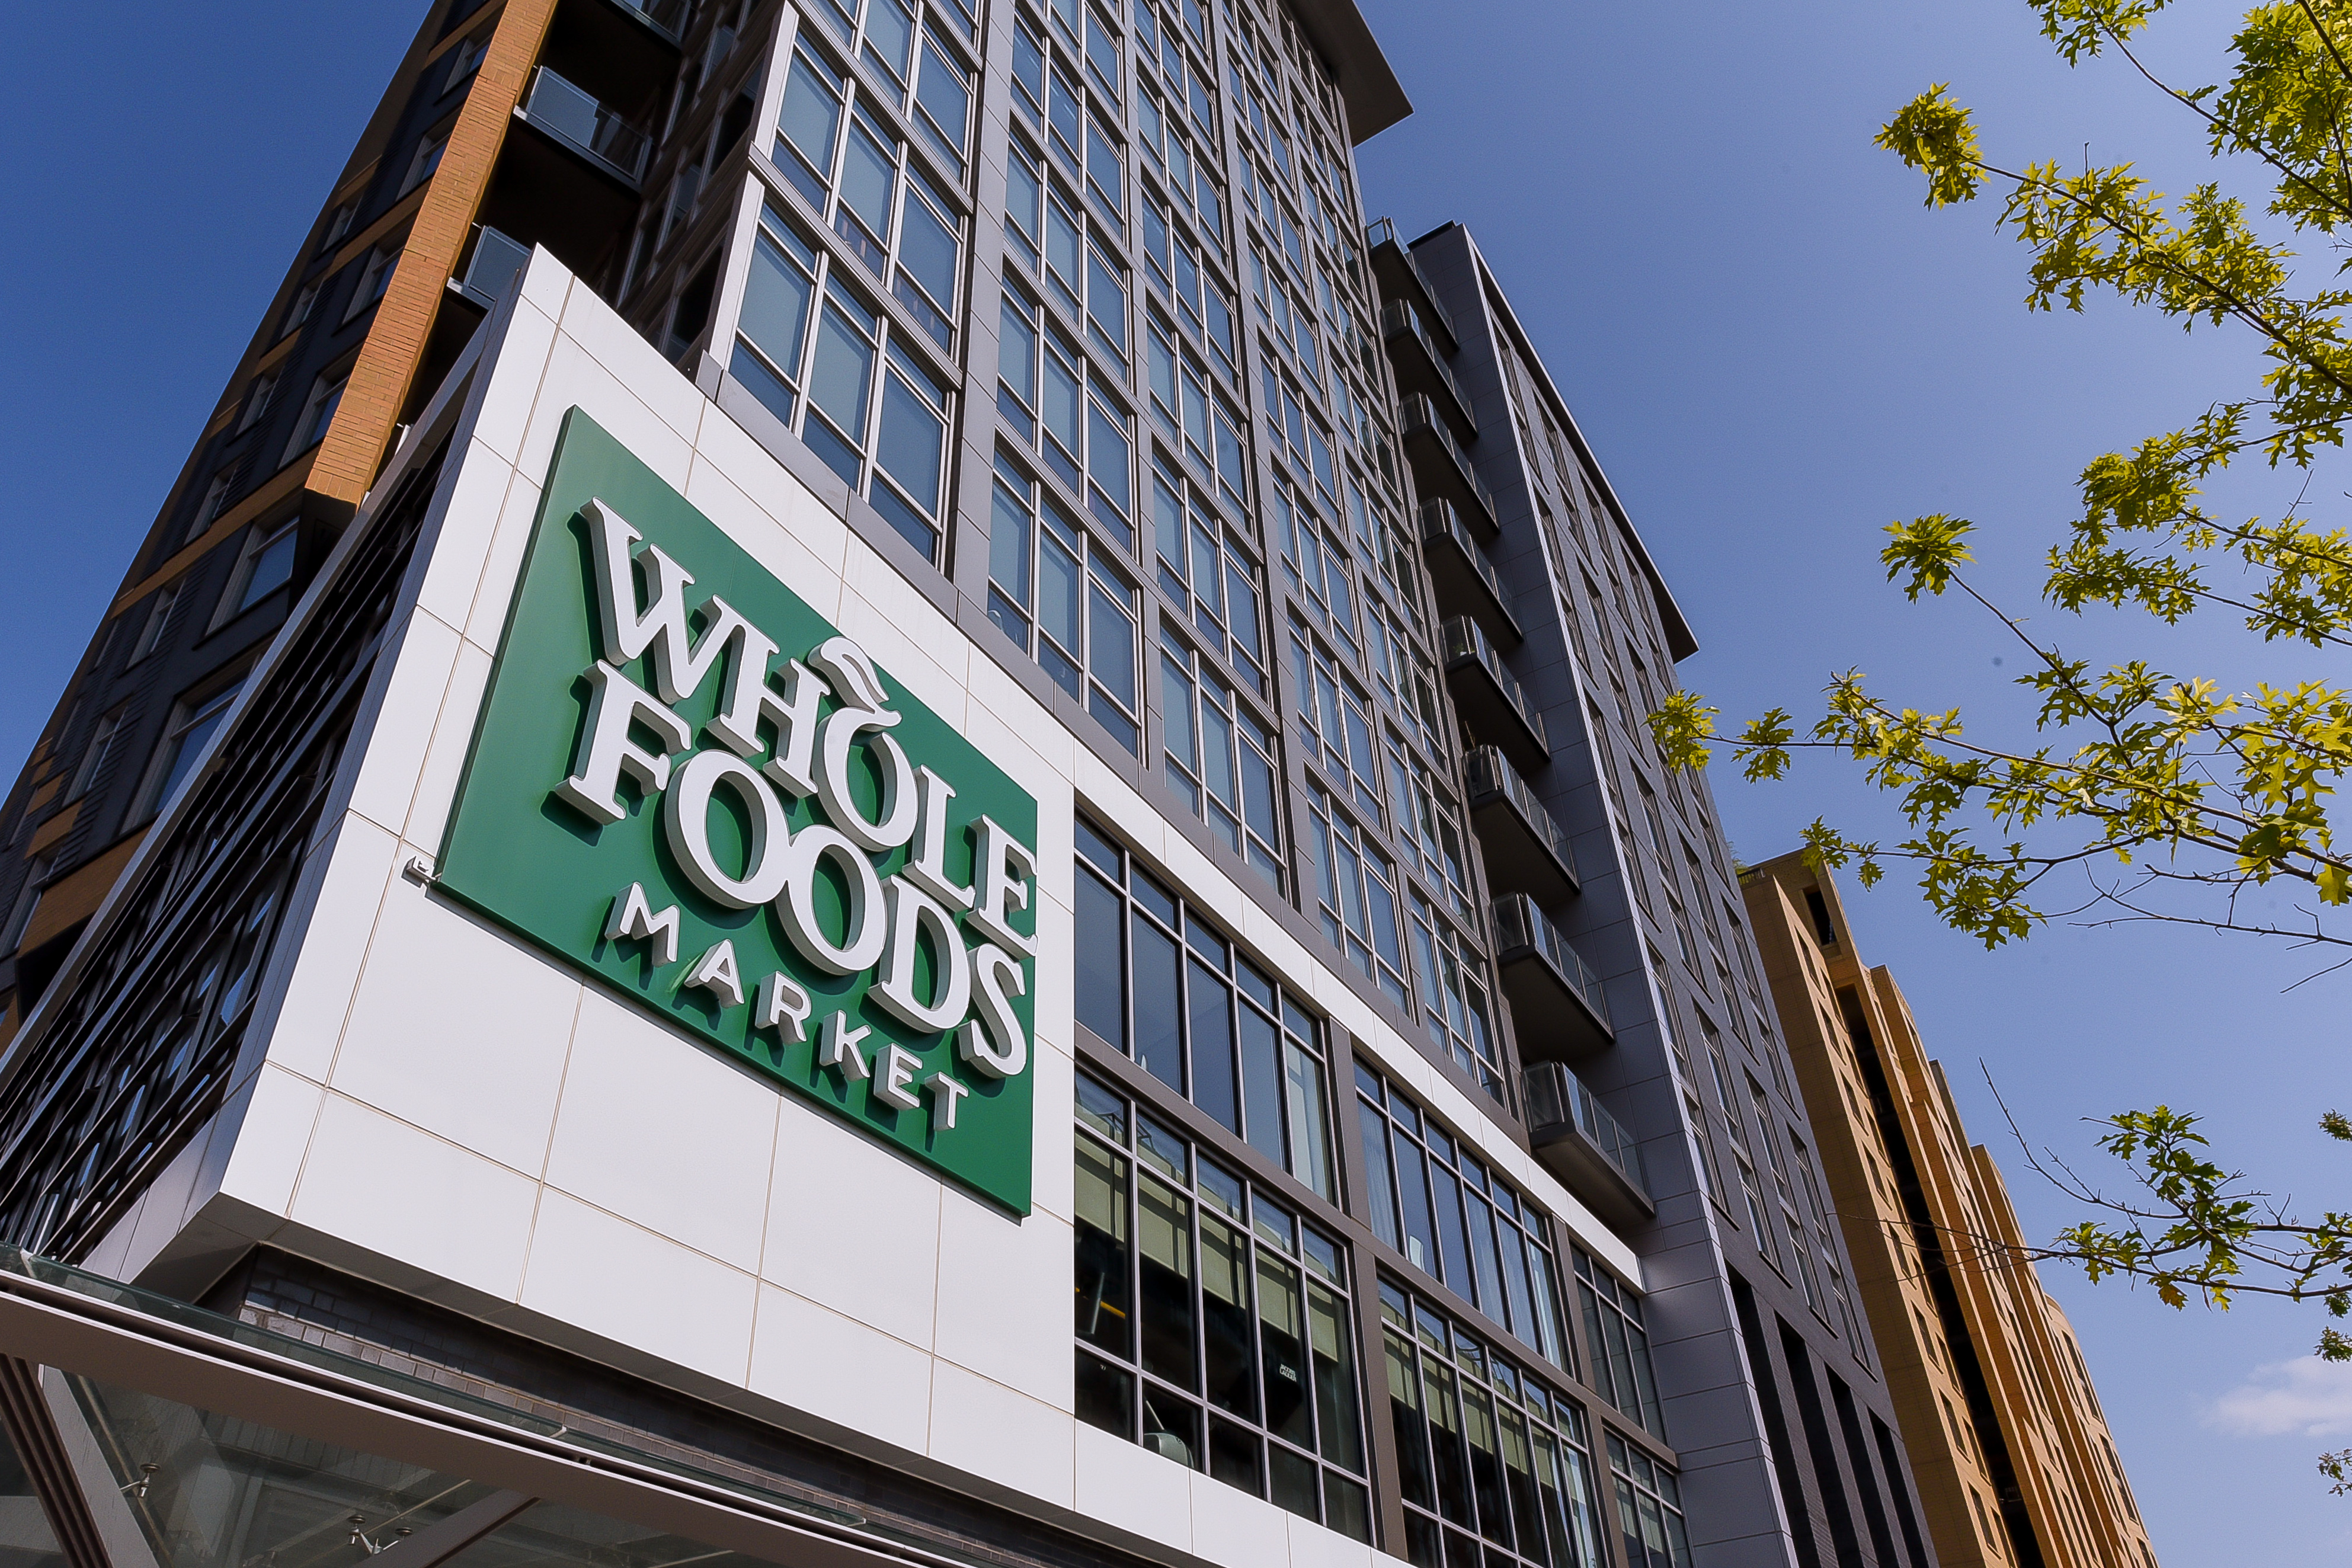 Capitol Riverfront - Whole Foods Signage DC Apartment Community